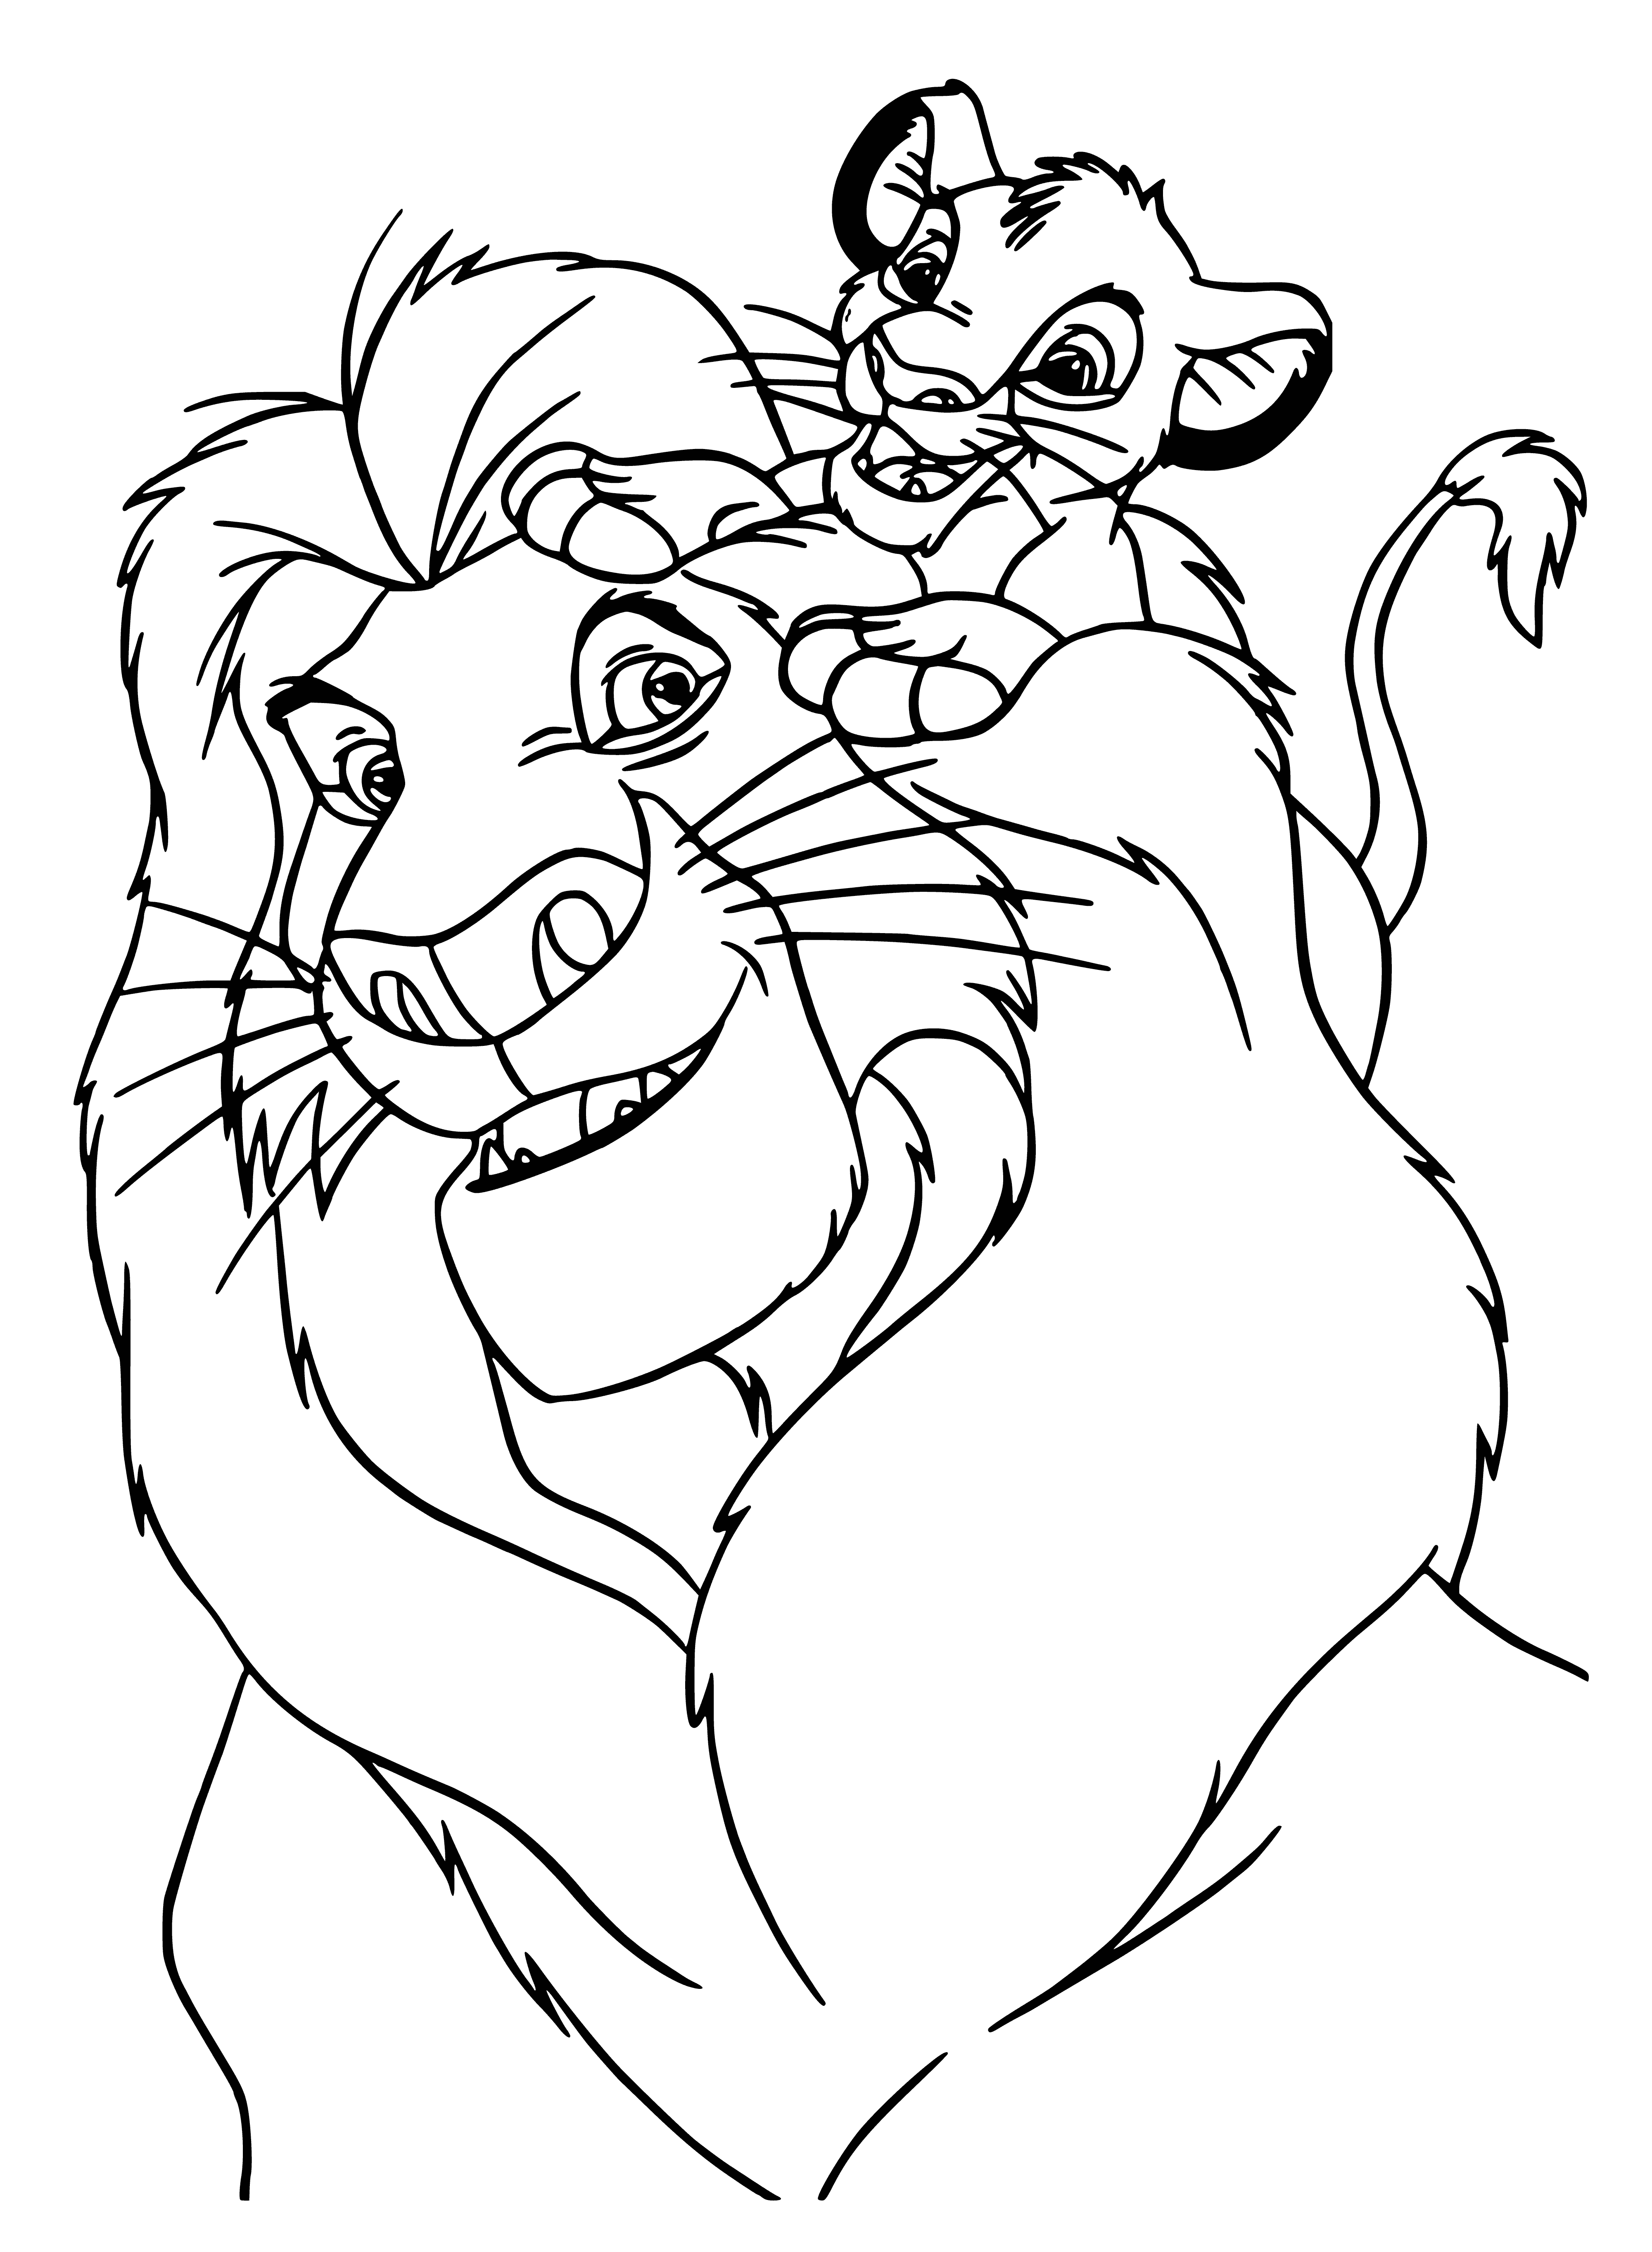 King Mufasa and Simba lion cub coloring page